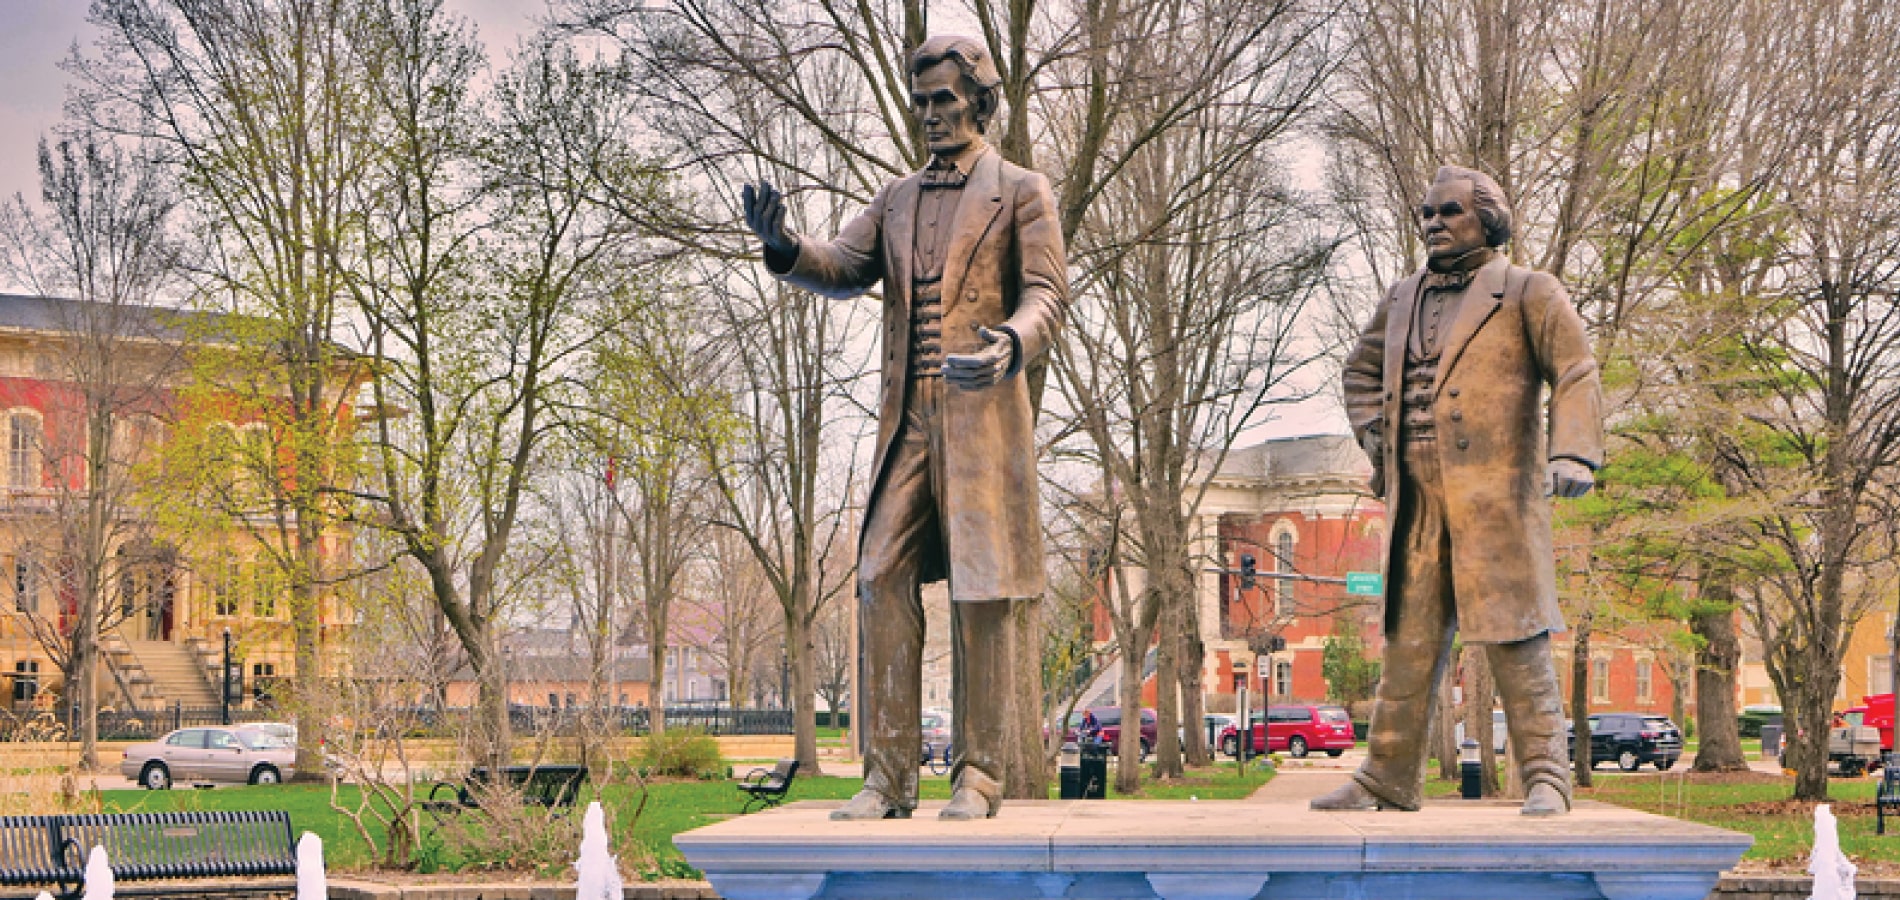 The statue commemorating the site of the Lincoln - Douglas debate in the Washington Park Historic District of Ottawa, Illinois